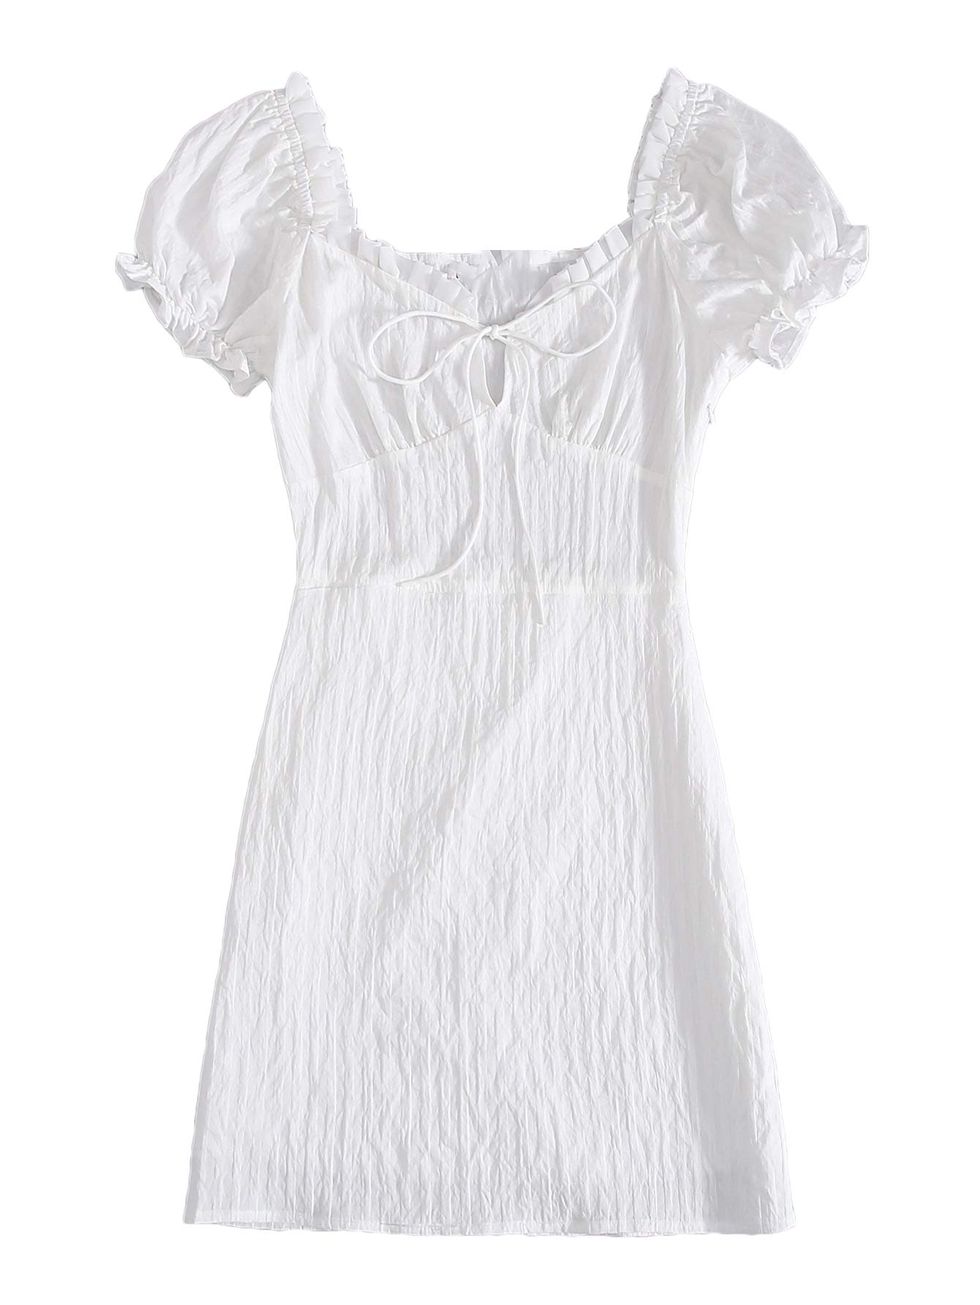 Shop Selena Gomez's Dreamy White Cottagecore Dress